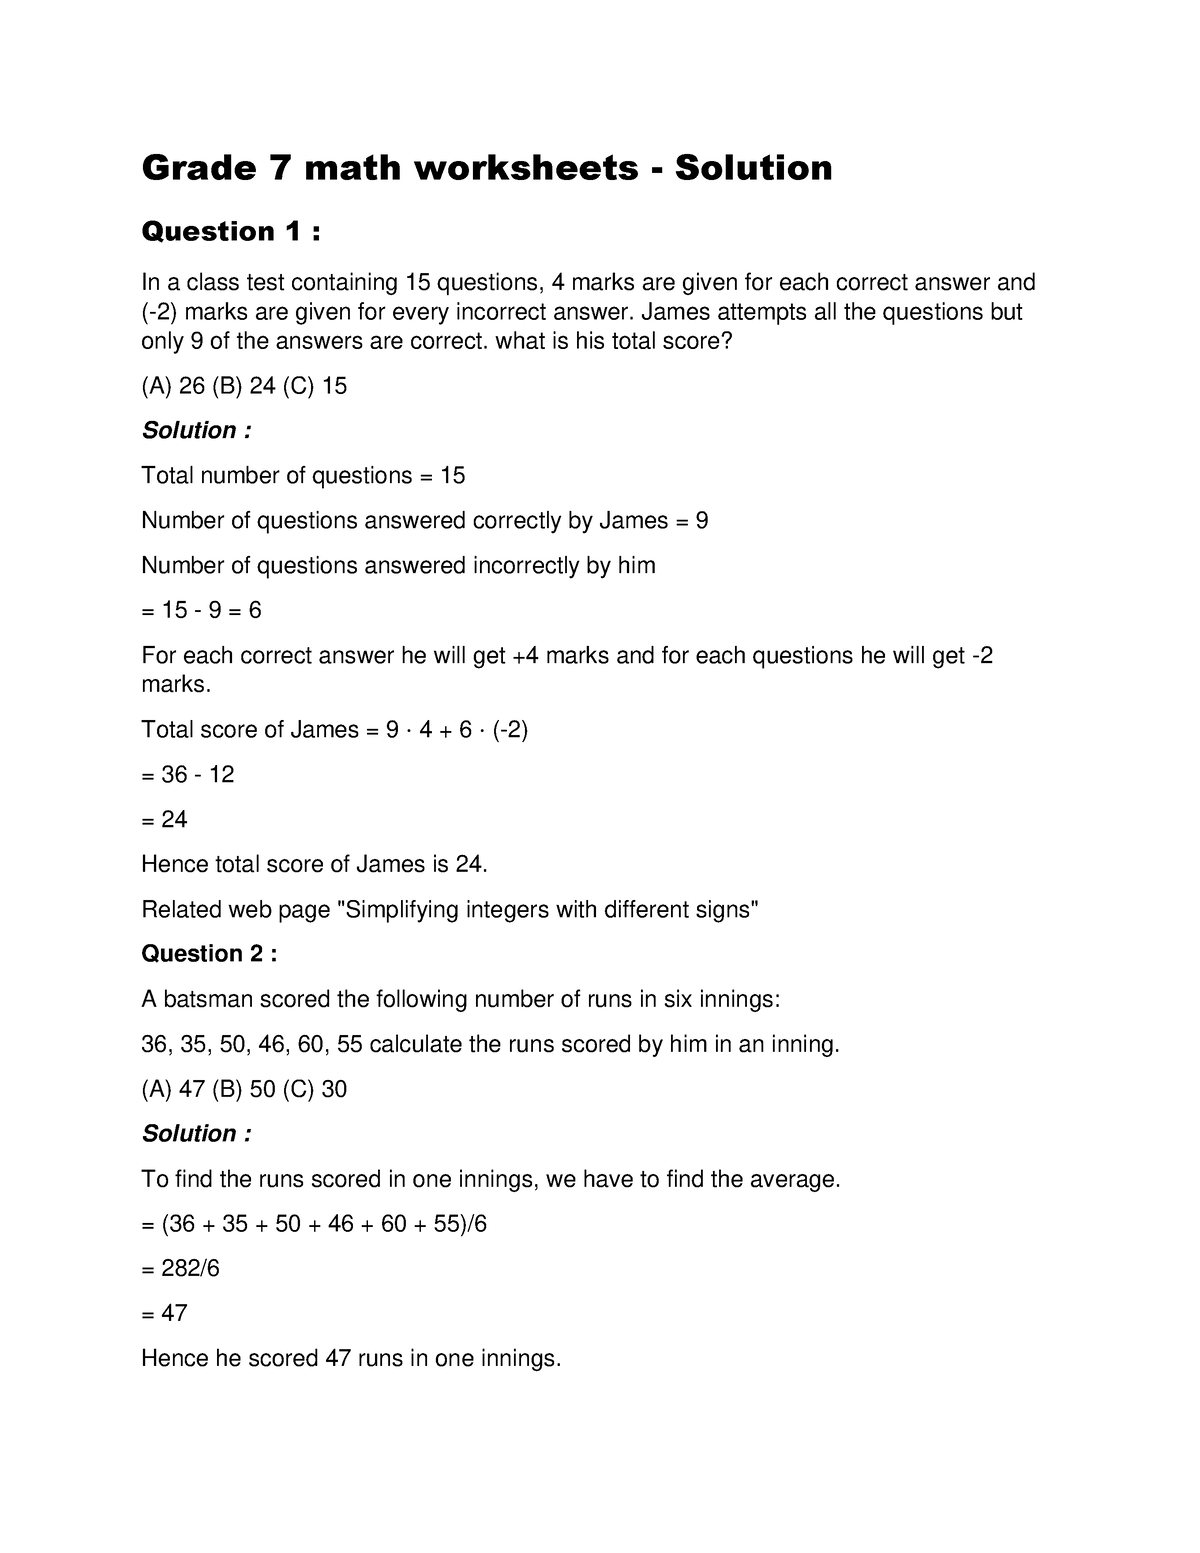 Grade 7 Math Worksheets Answer Key